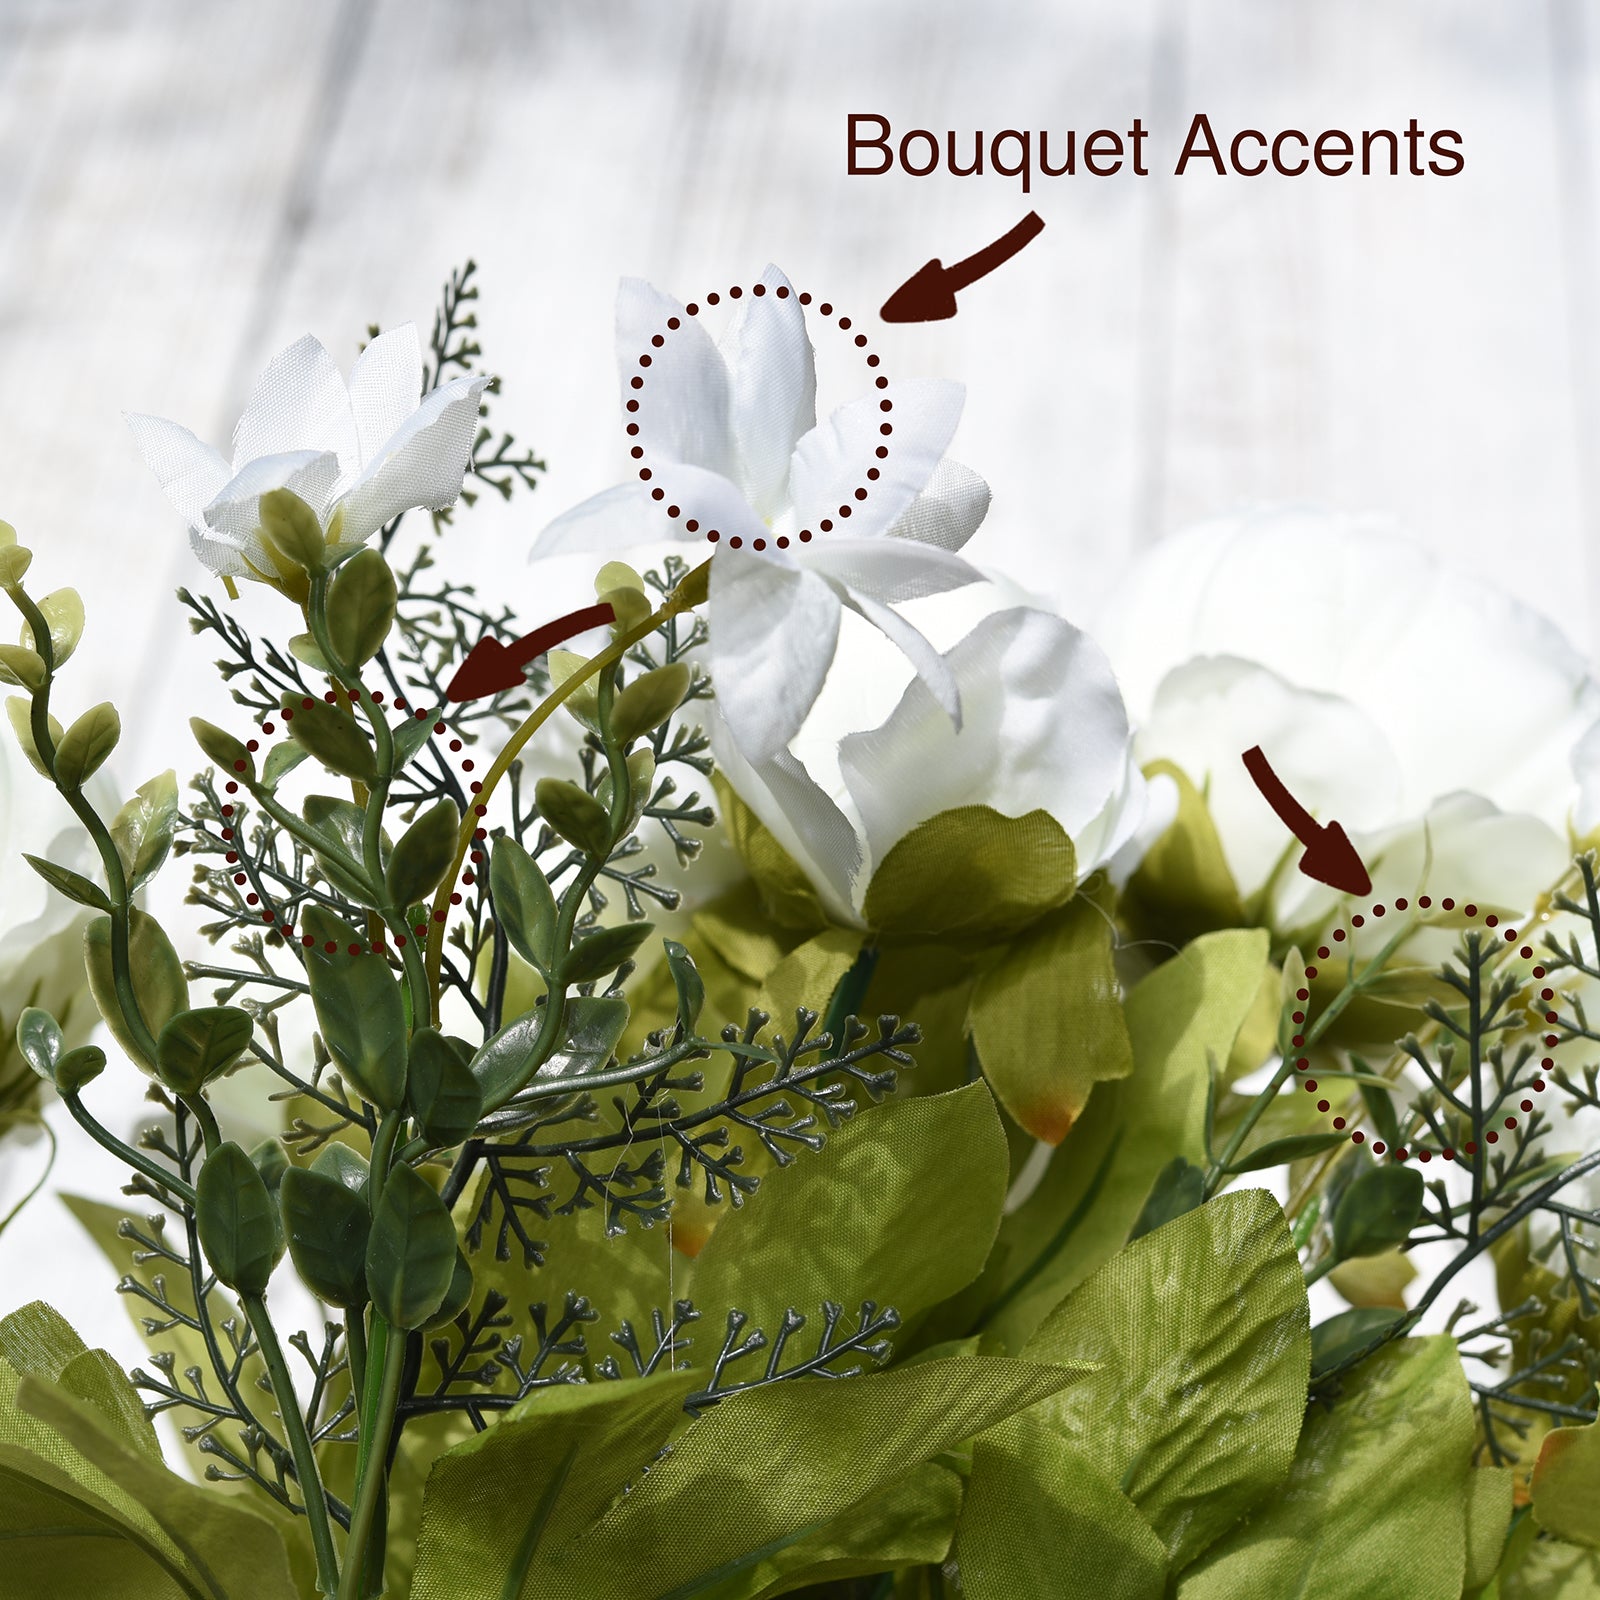 FiveSeasonStuff 2 Bundles Plum Purple|White Peonies Artificial Flower Bouquet